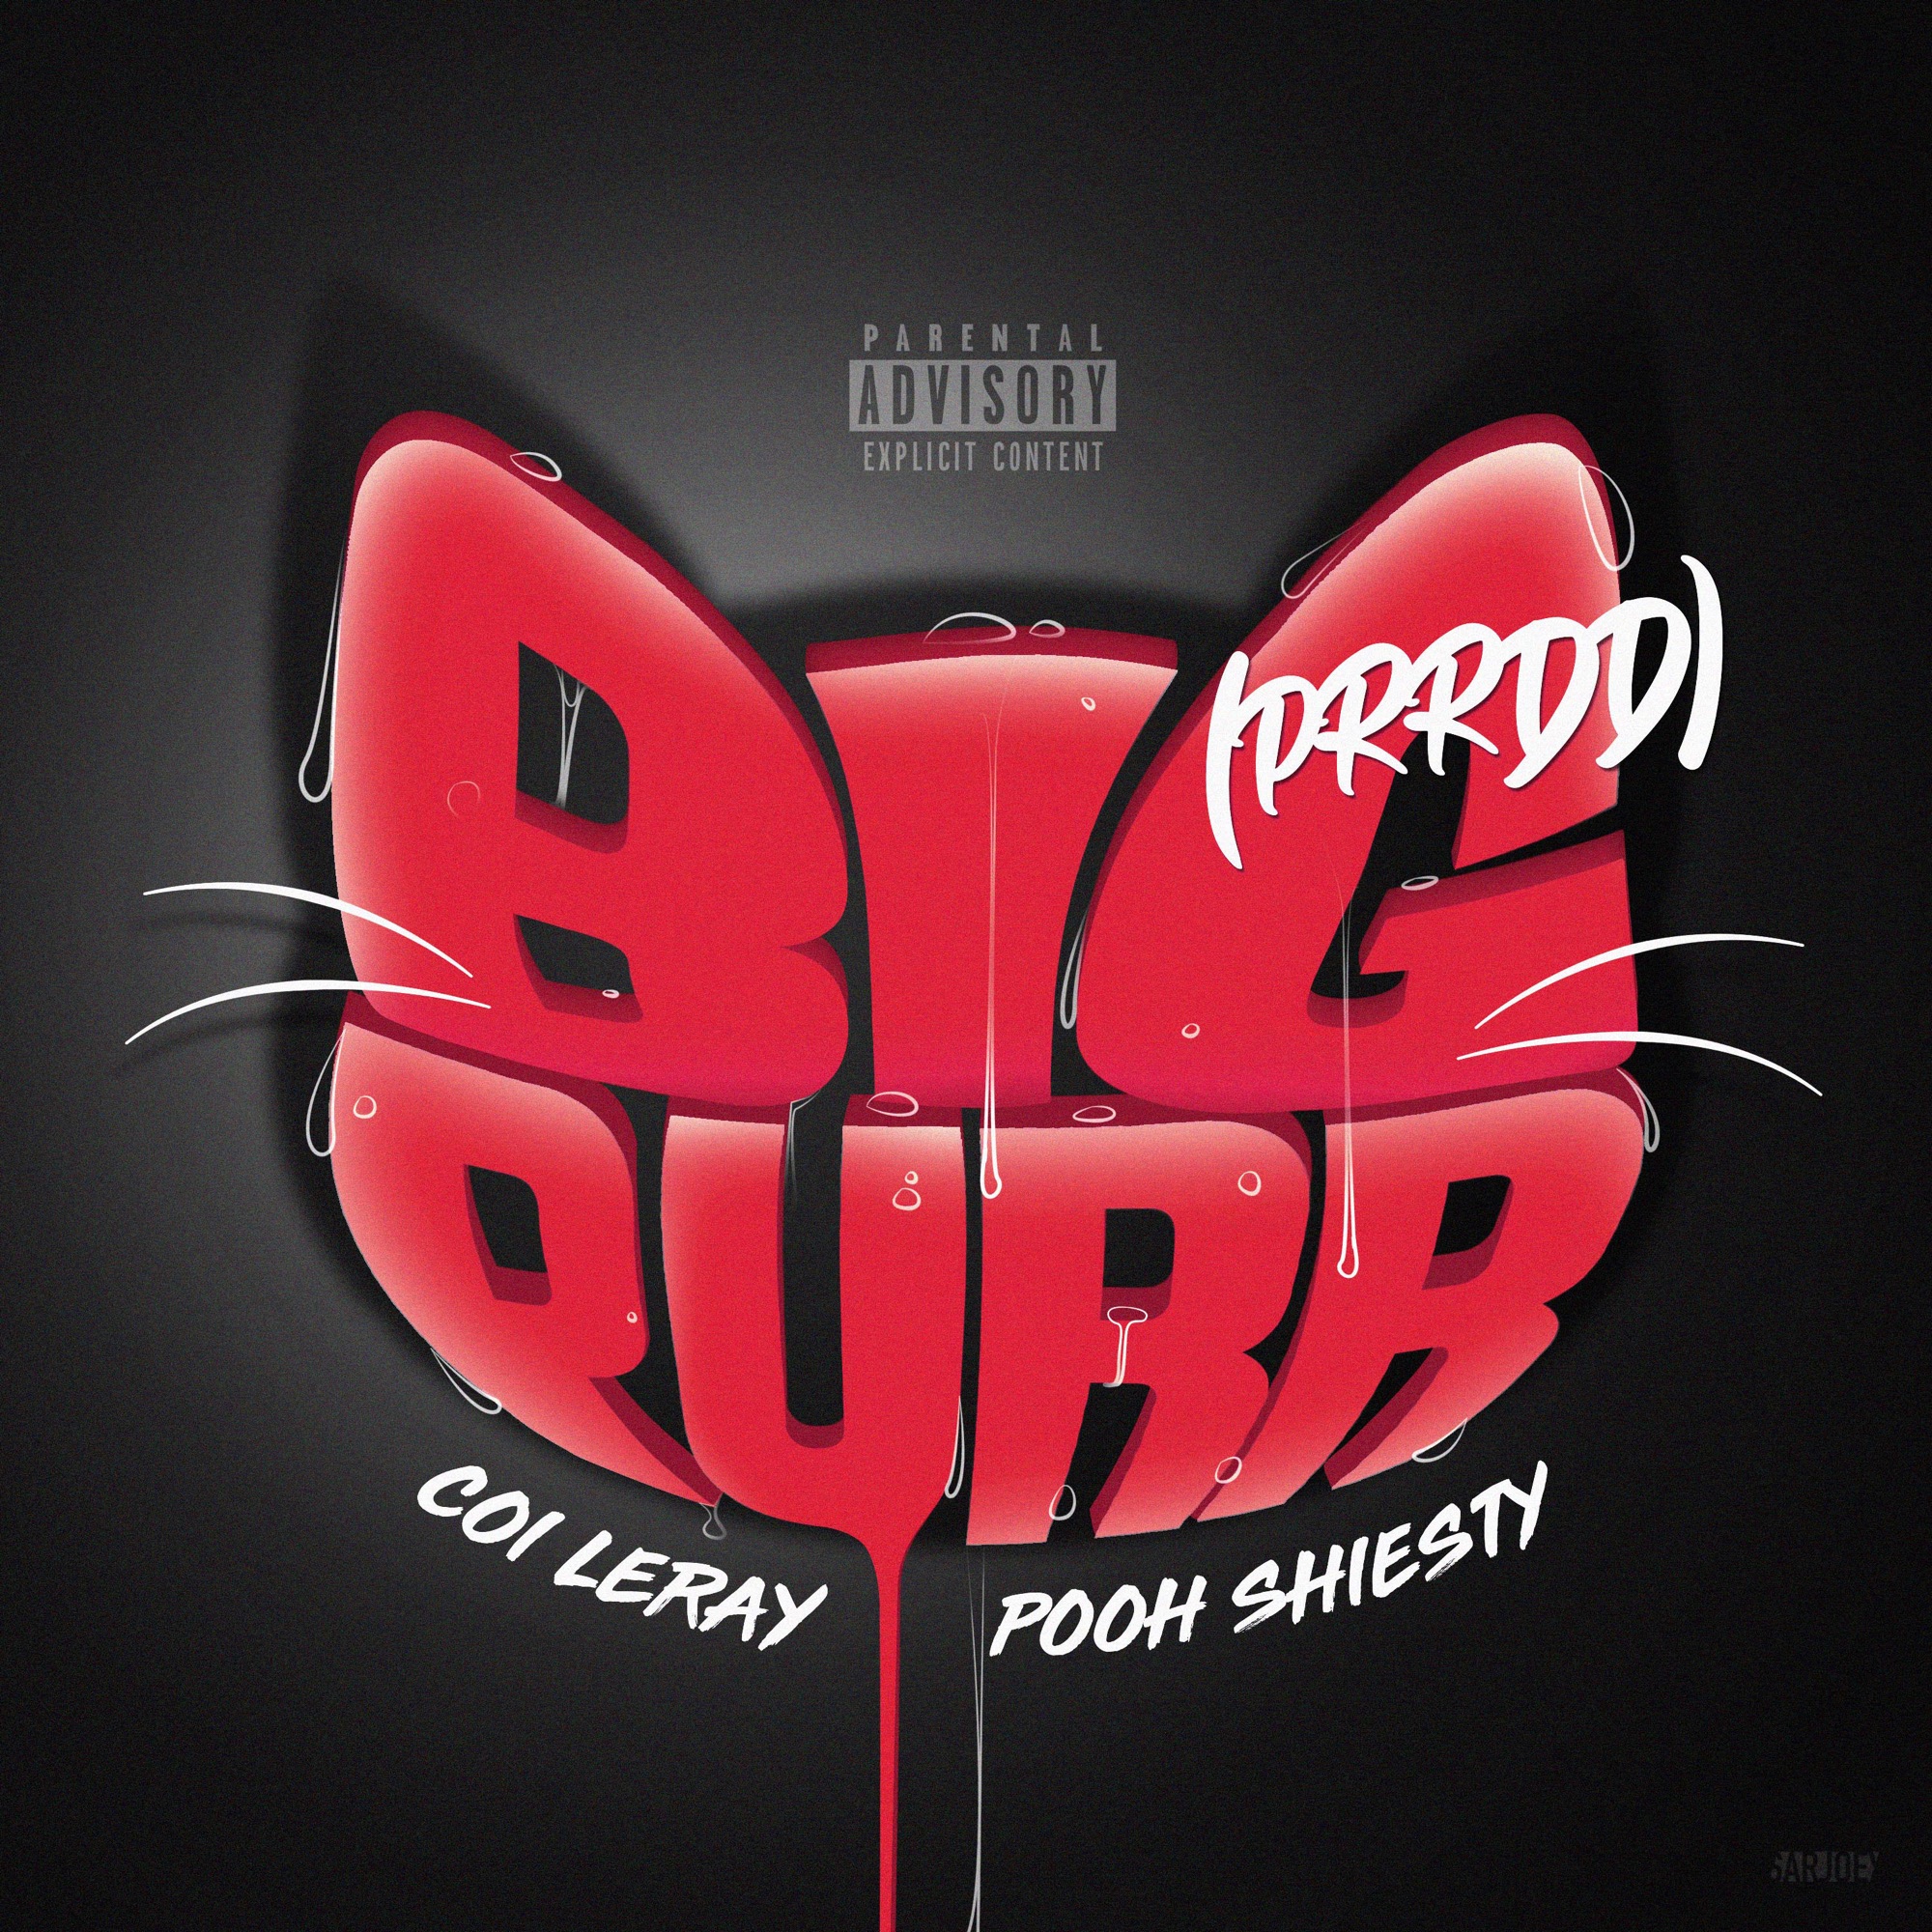 Coi Leray - BIG PURR (Prrdd) [feat. Pooh Shiesty] - Single